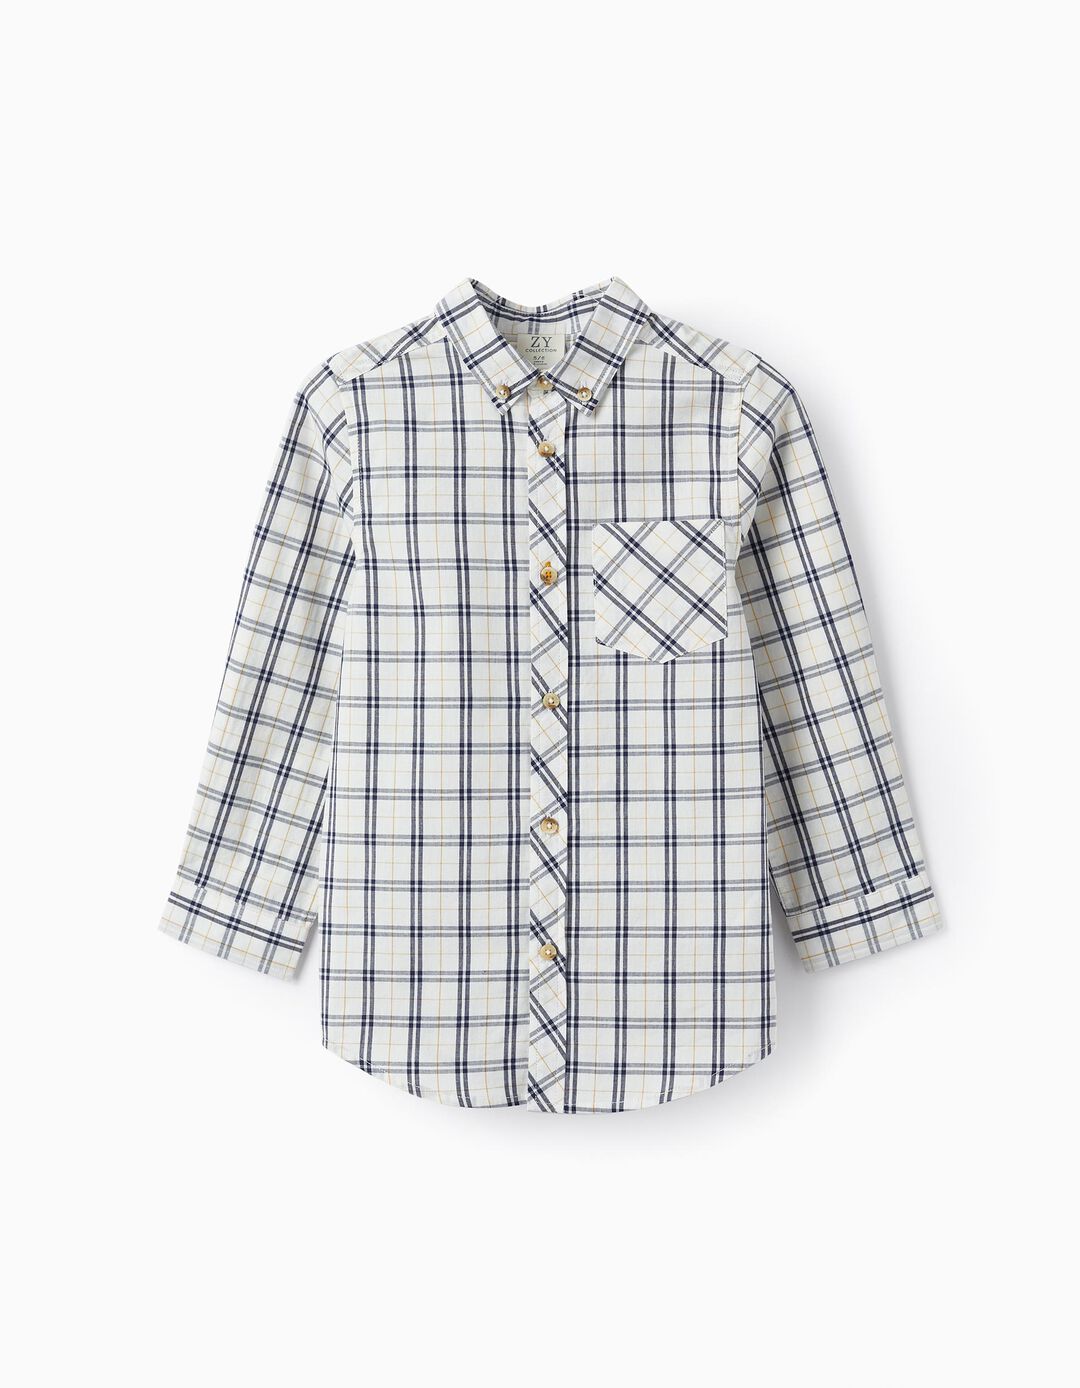 Cotton Checkered Shirt for Boys, White